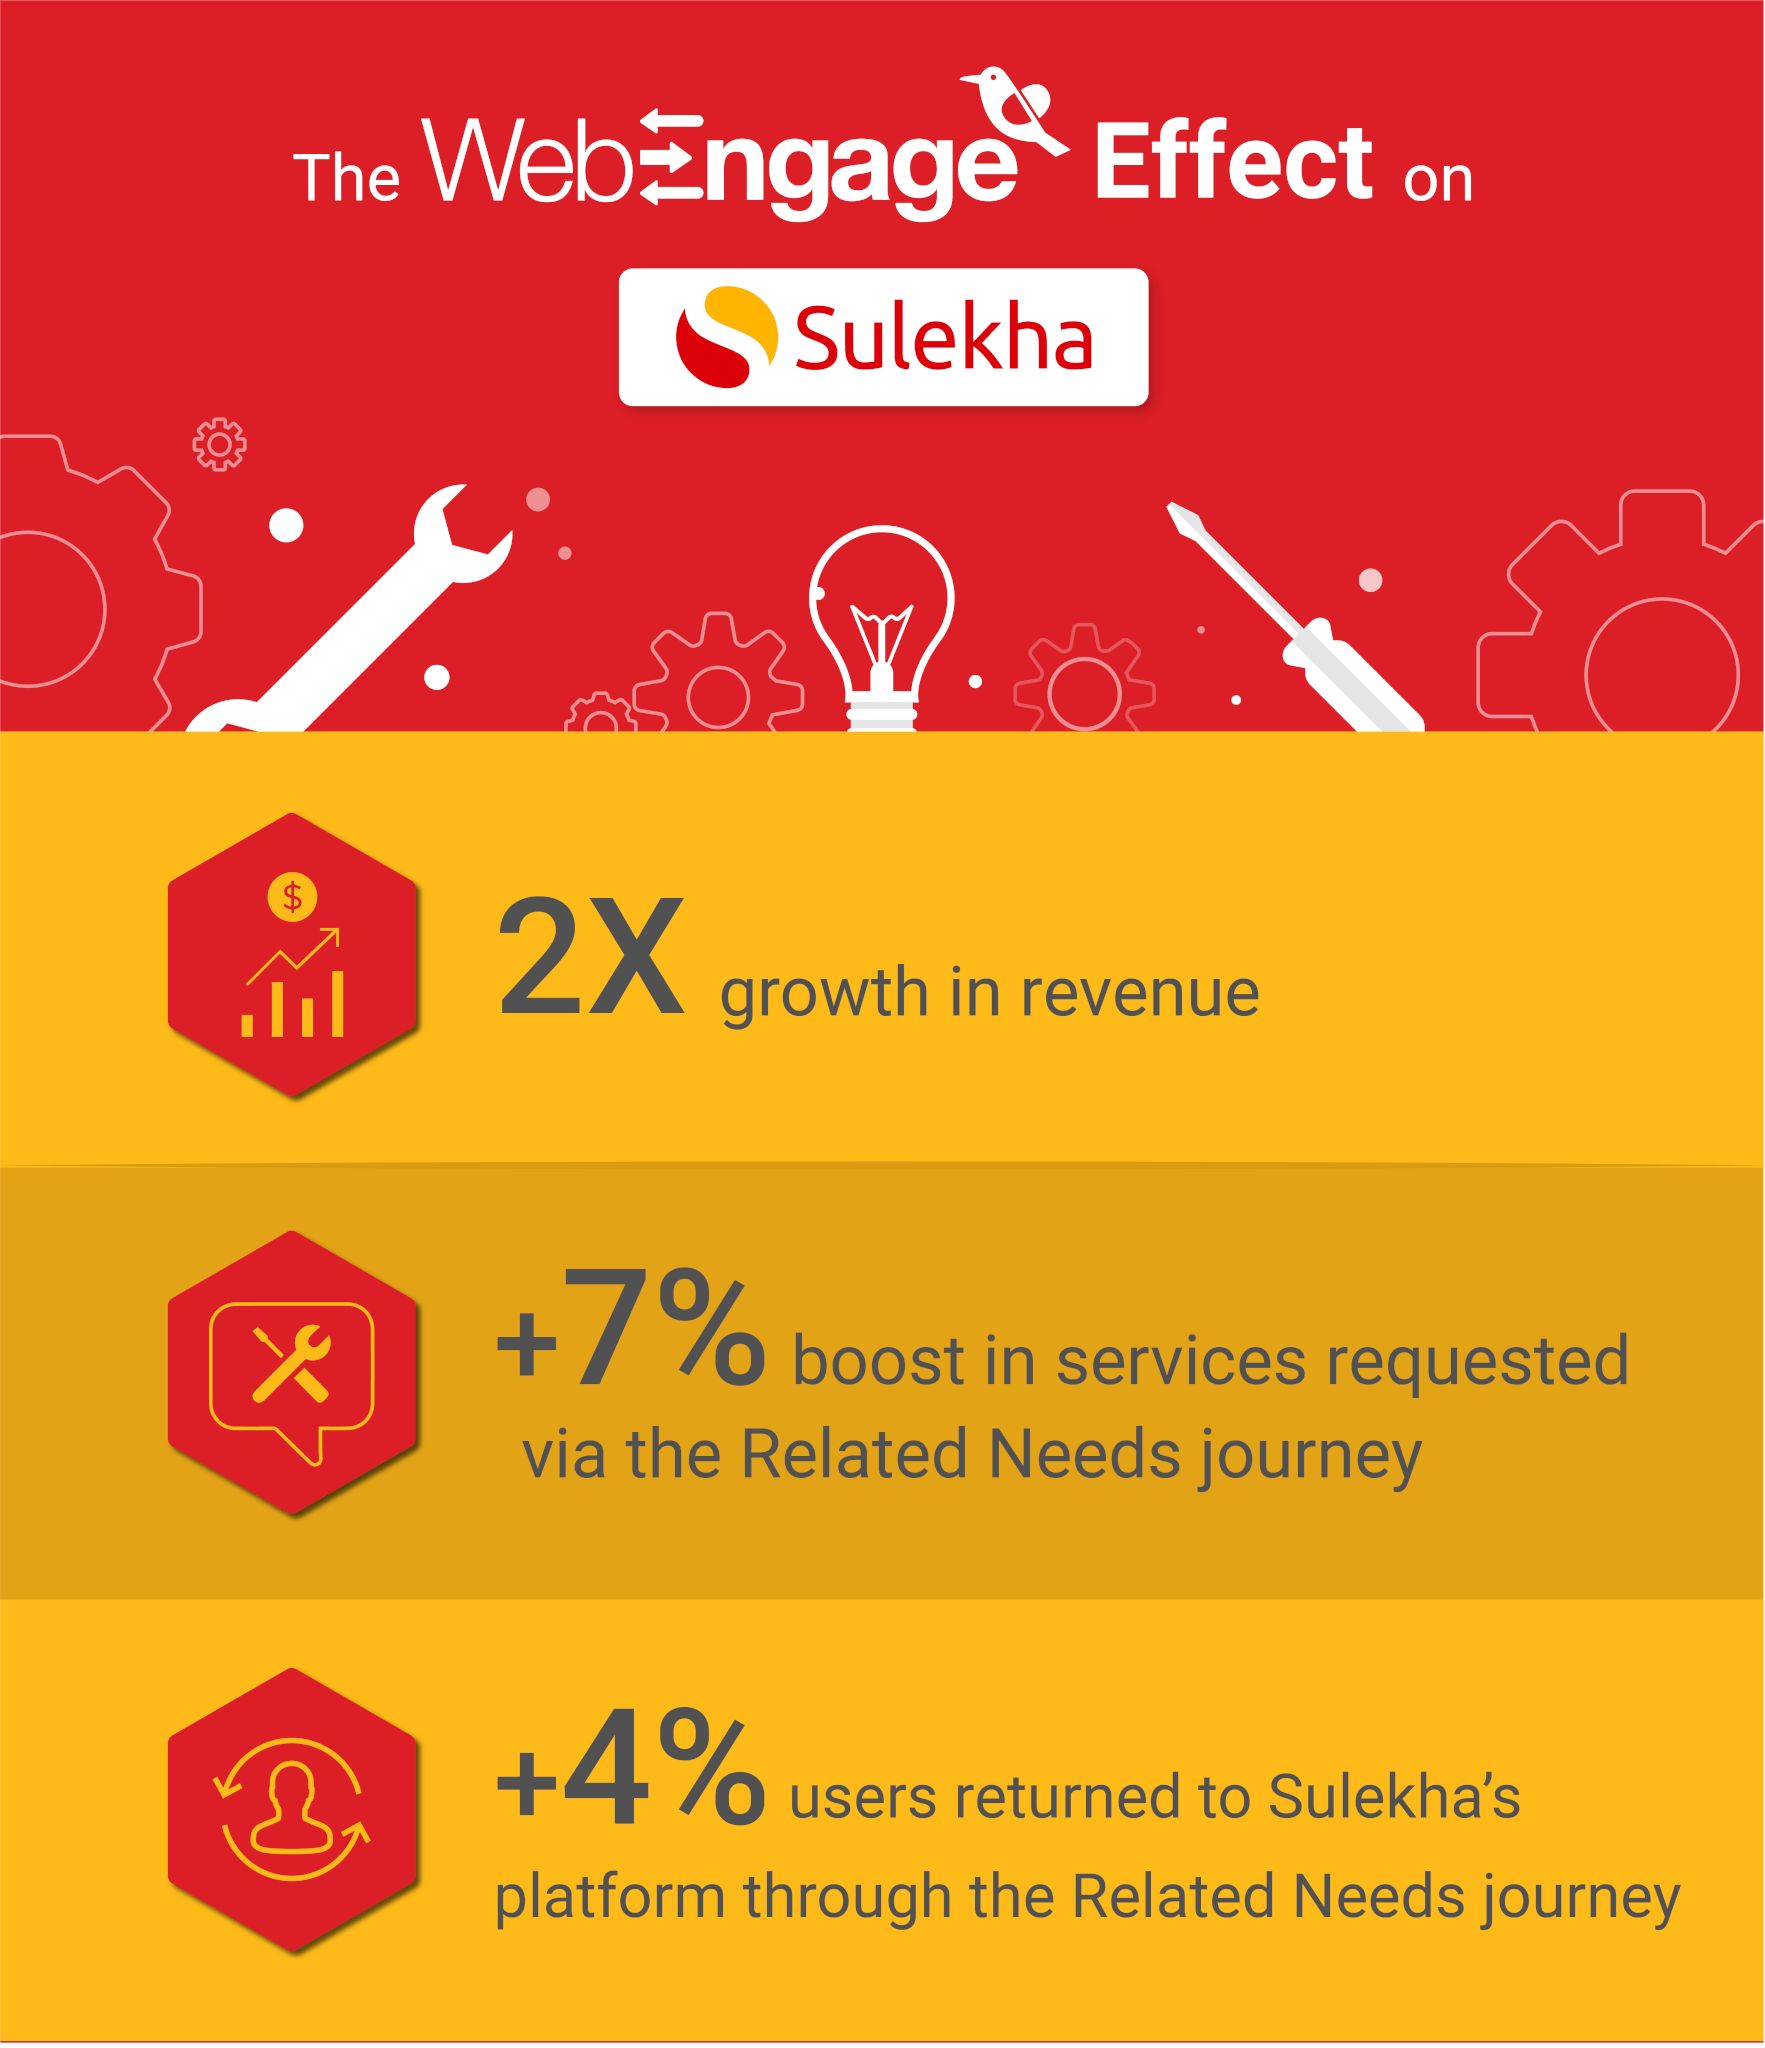 Sulekha witnesses 2X growth in revenue using WebEngage | Case Study